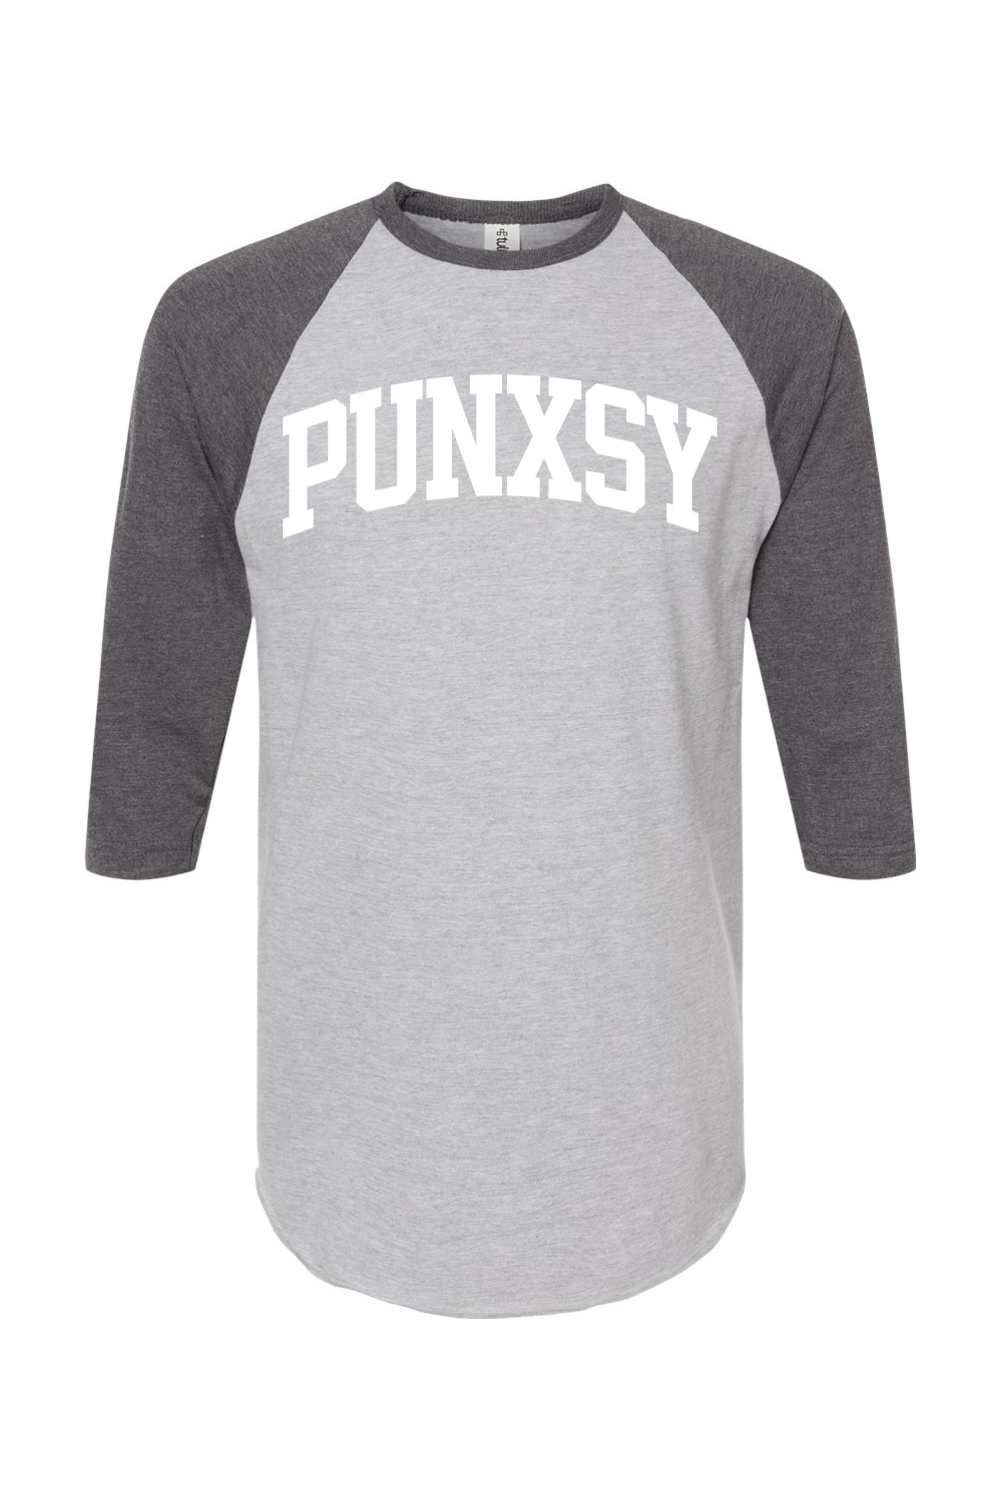 Punxsy Collegiate - Raglan T-Shirt - Yinzylvania